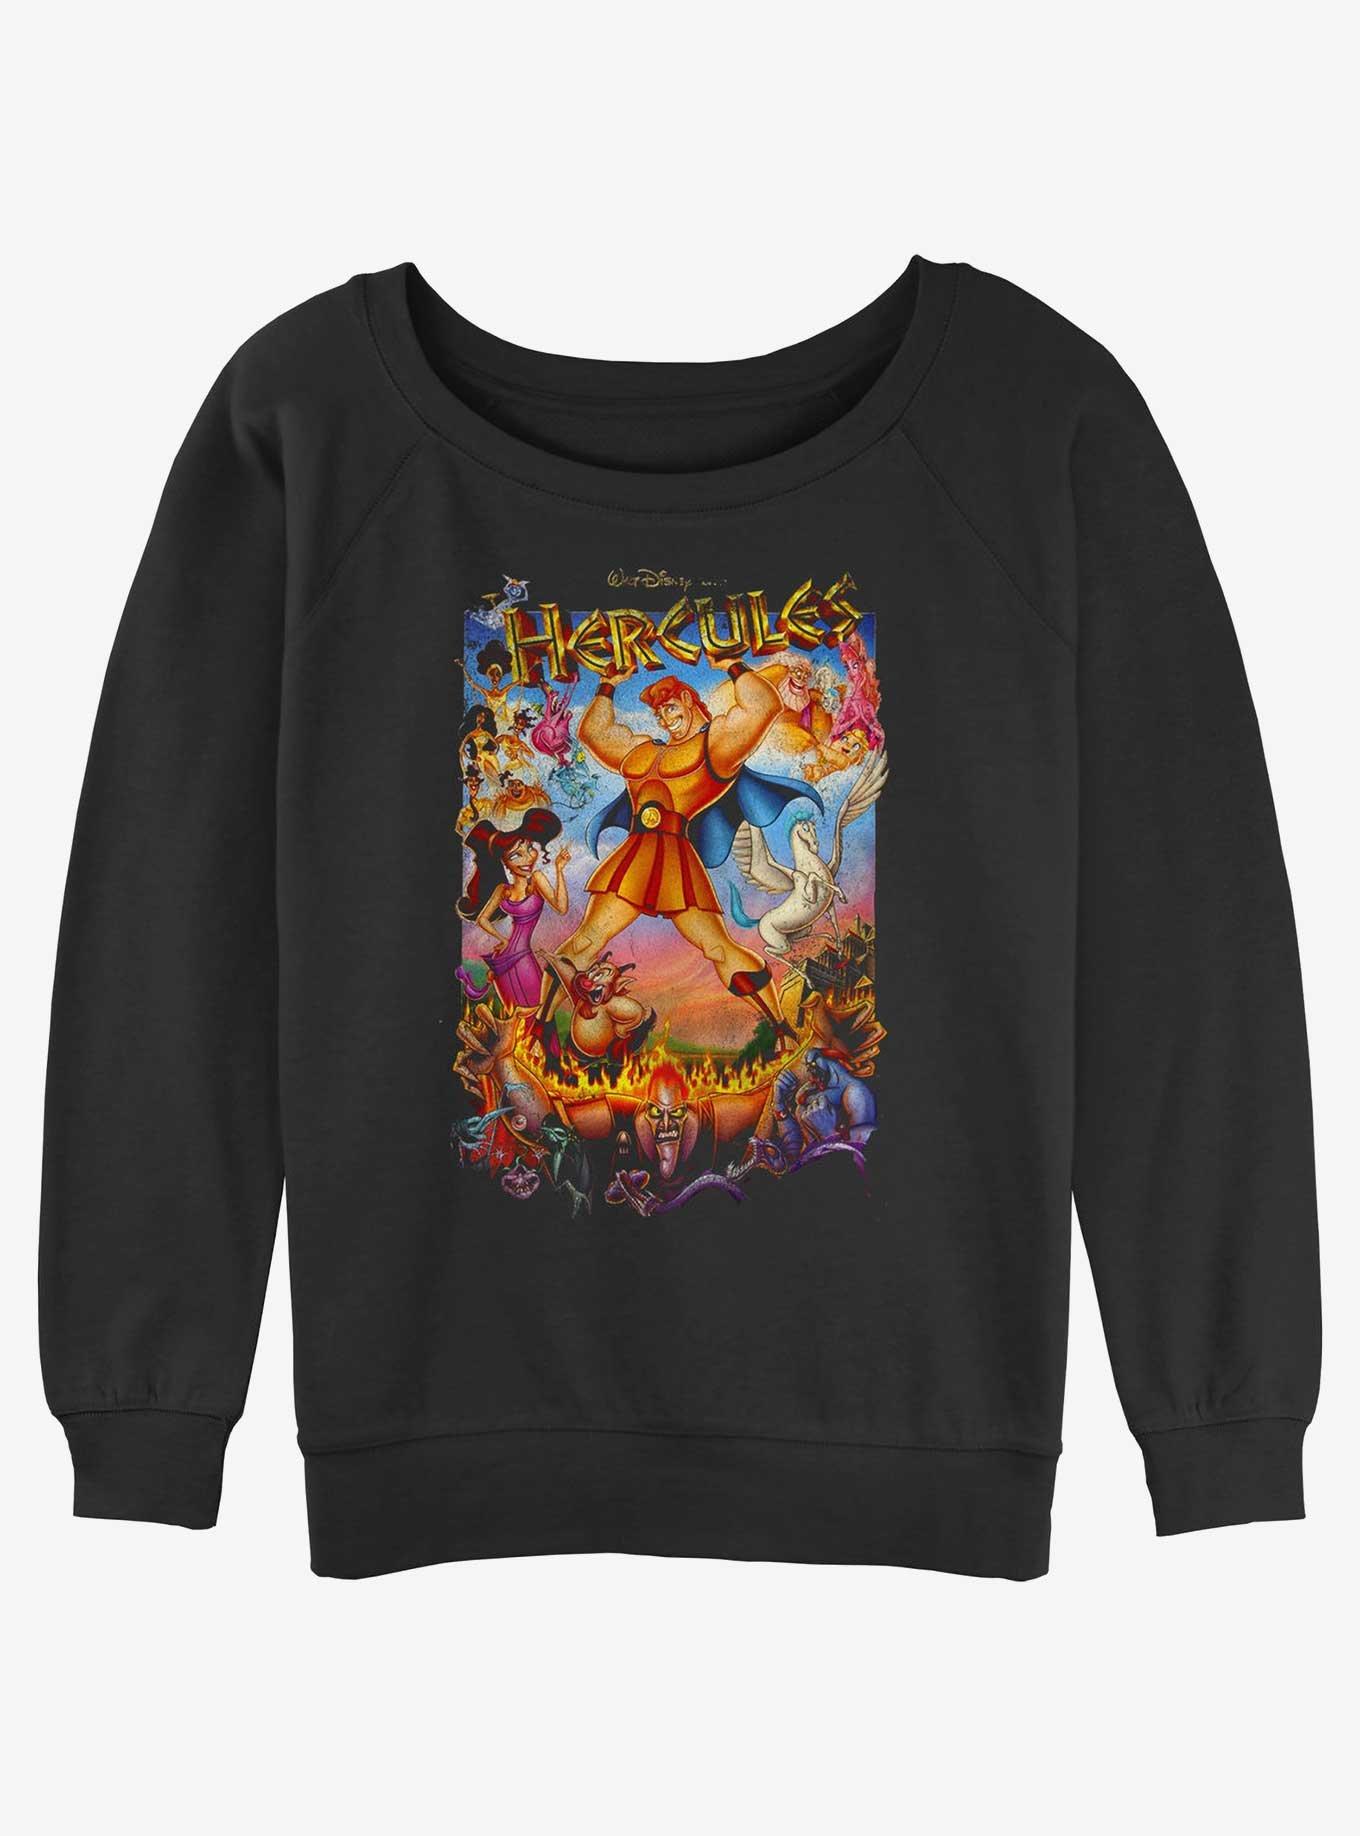 Disney Hercules Poster Girls Slouchy Sweatshirt, BLACK, hi-res